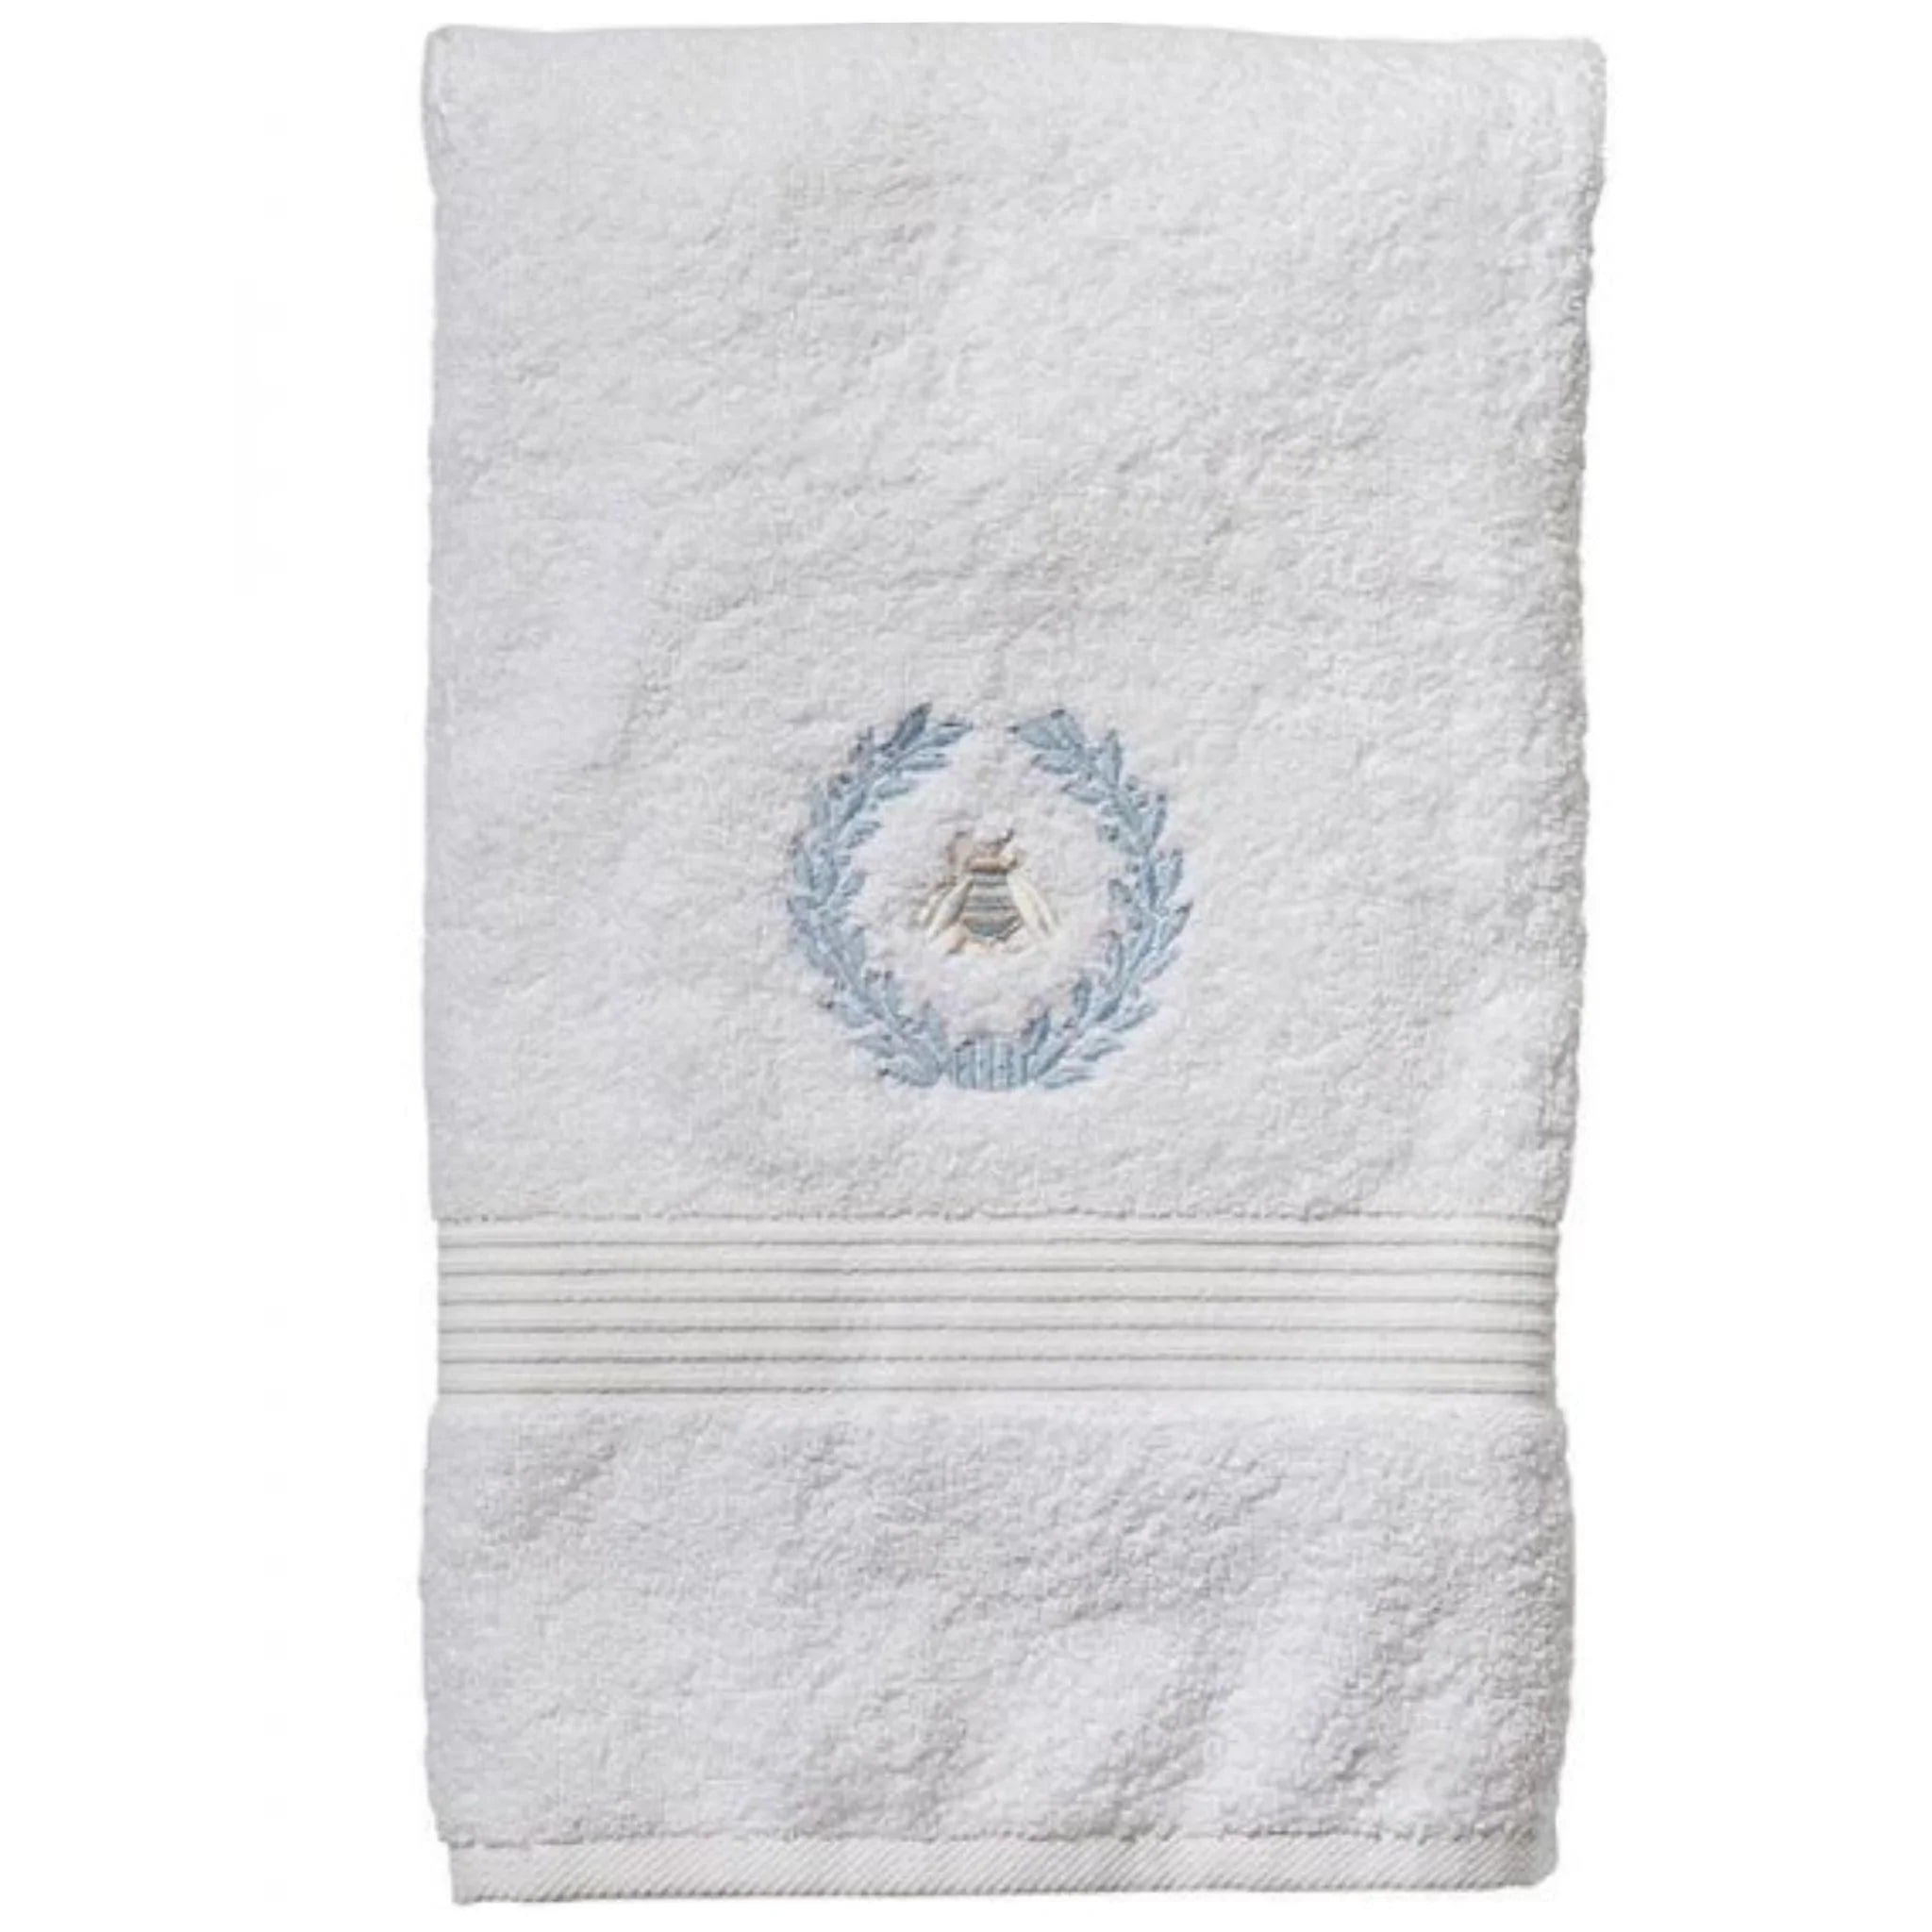 Cotton Terry Bath Towels 27x52 White